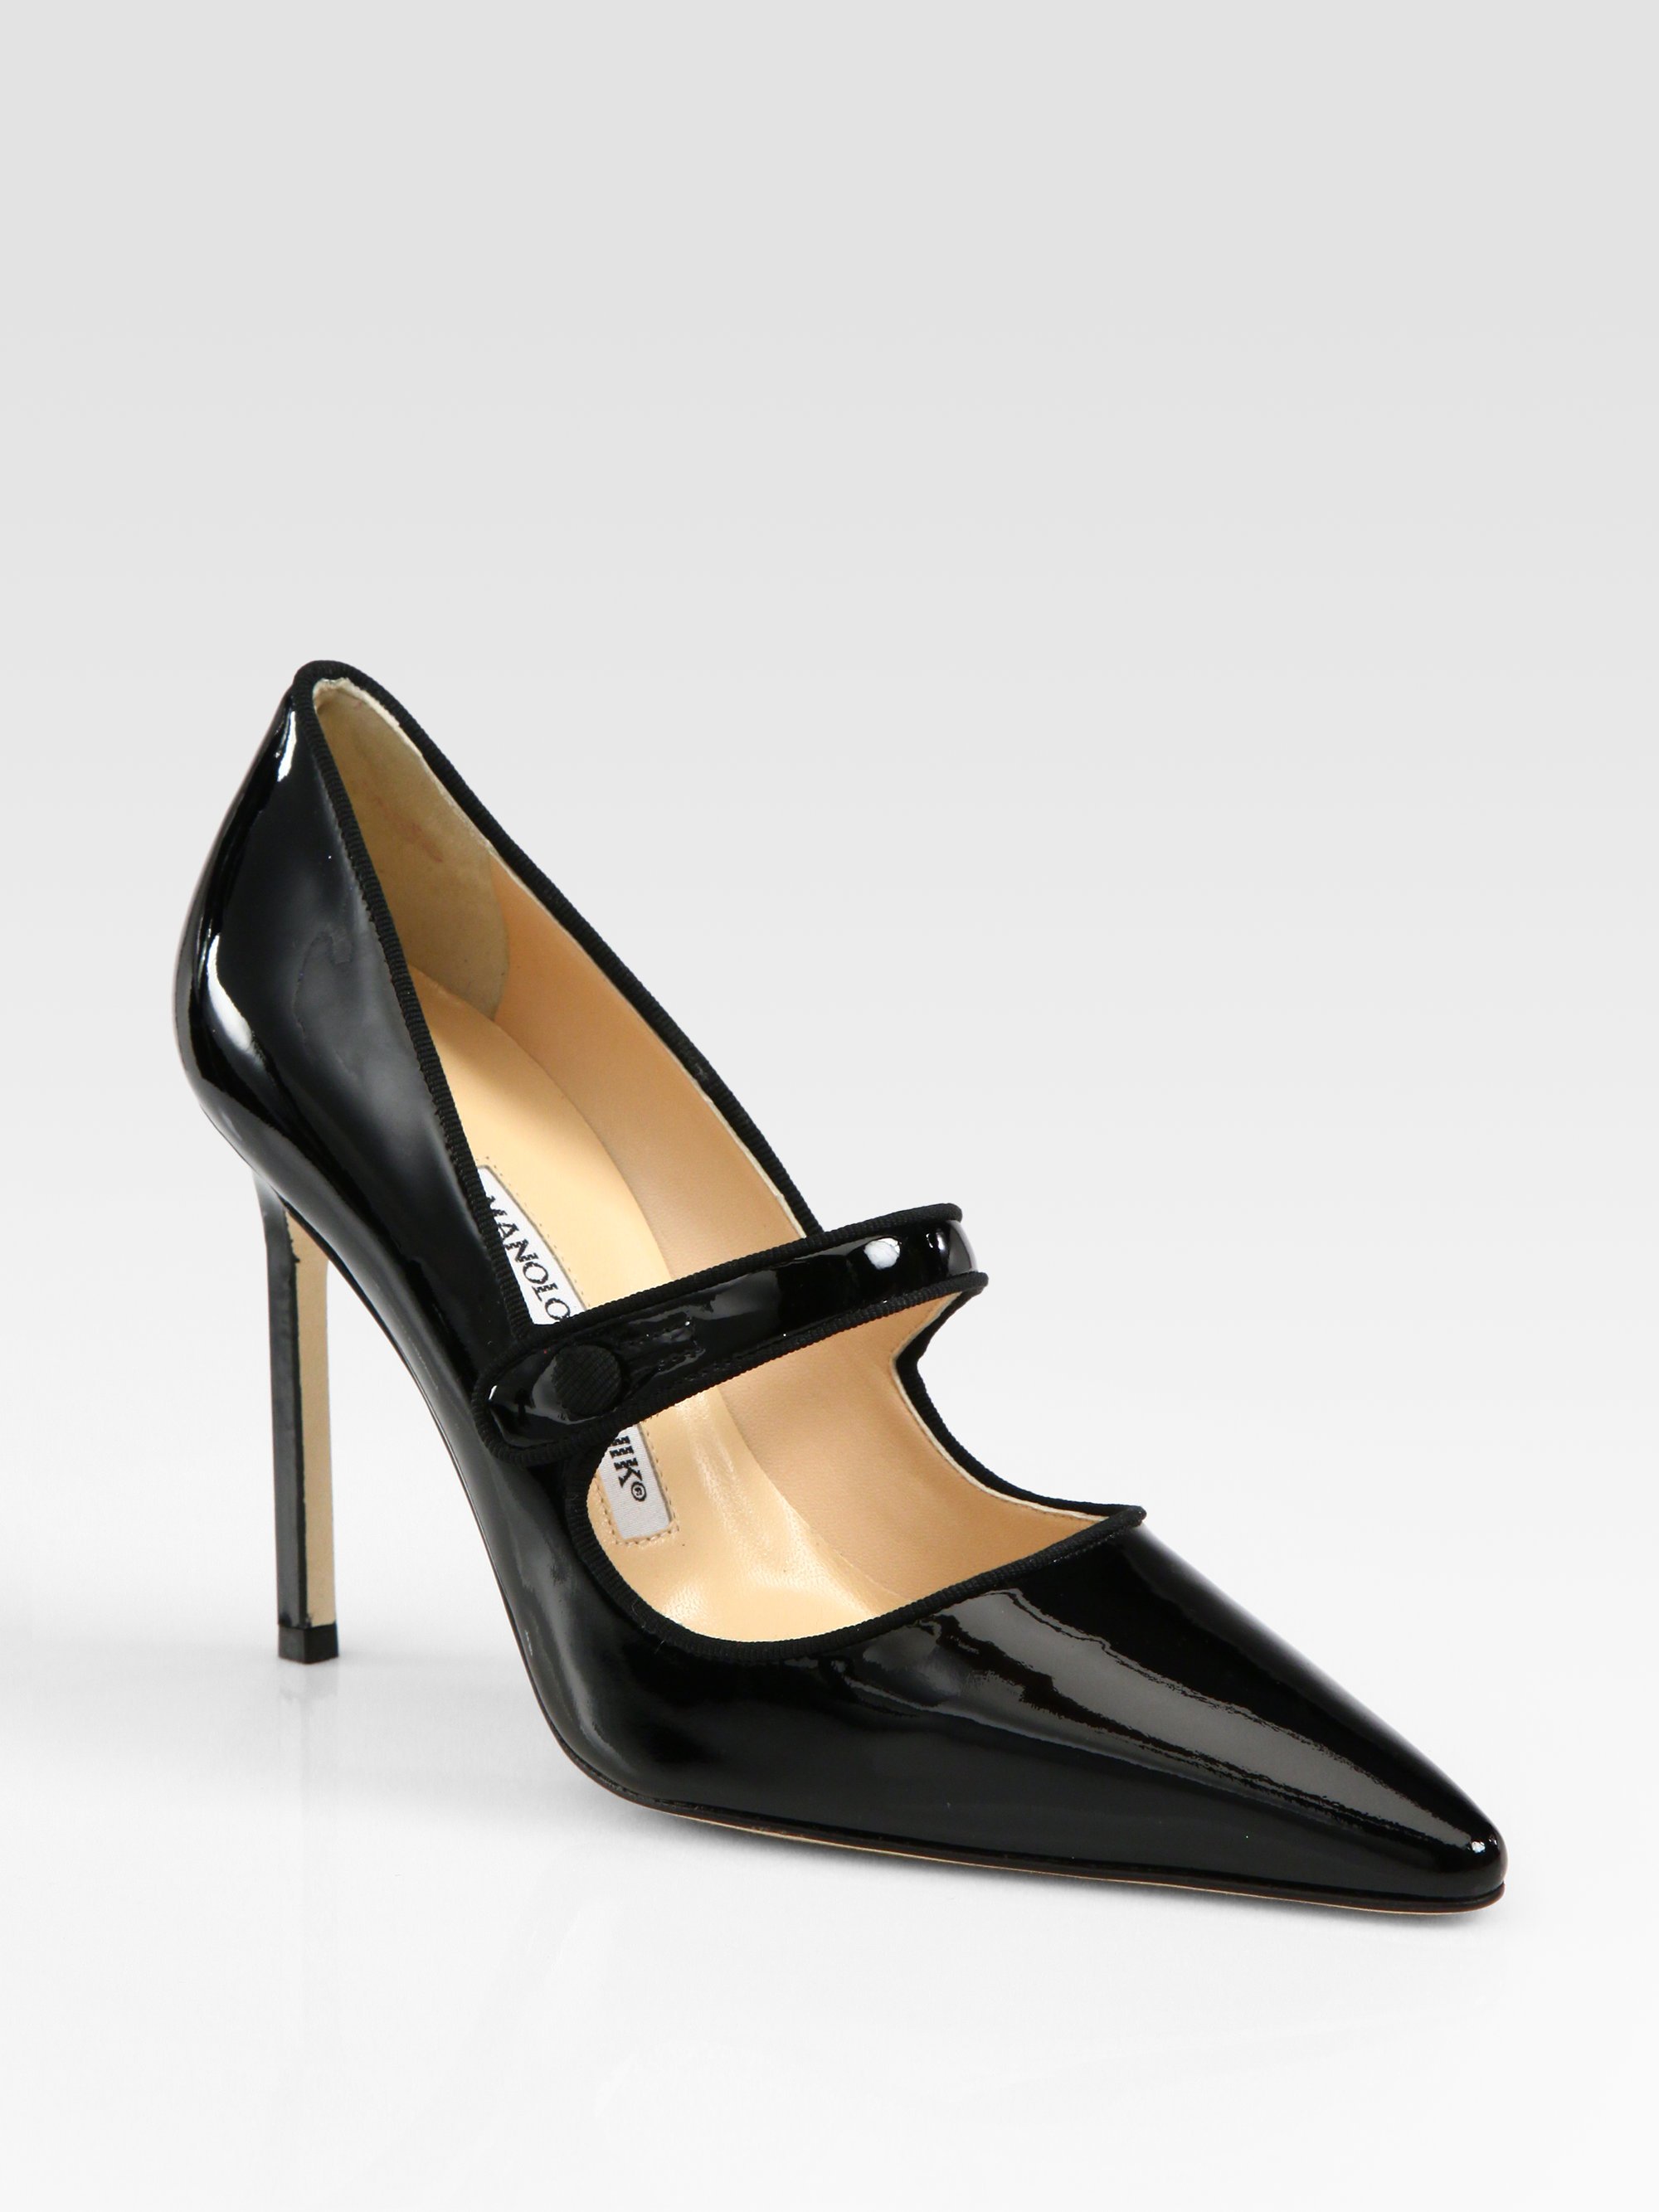 patent mary jane heels